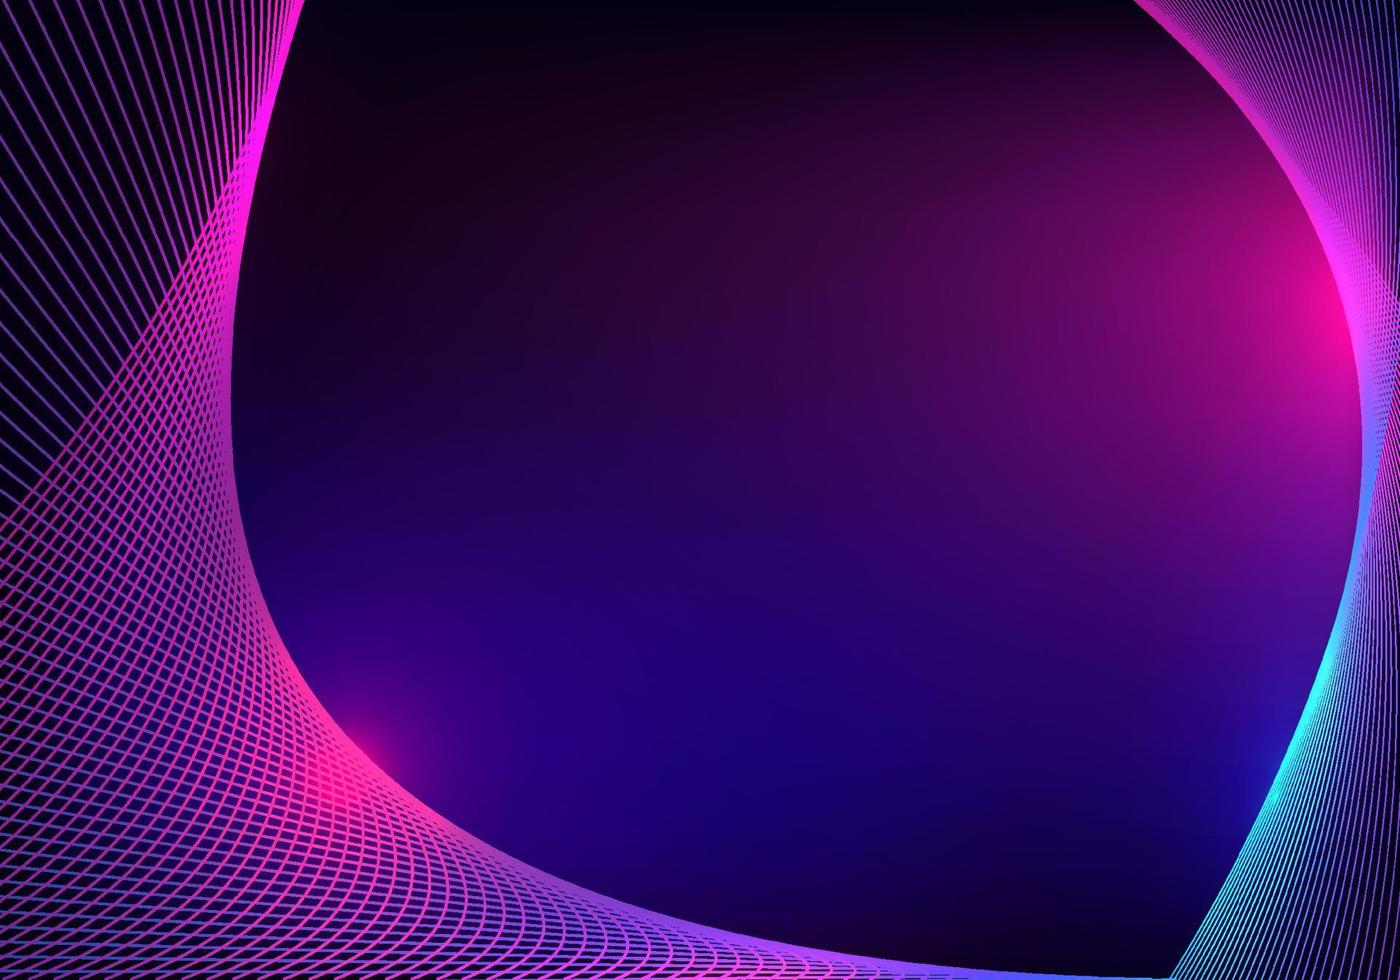 concepto de tecnología abstracta patrón de líneas de colores de neón brillante azul y rosa con efecto de iluminación sobre fondo oscuro vector